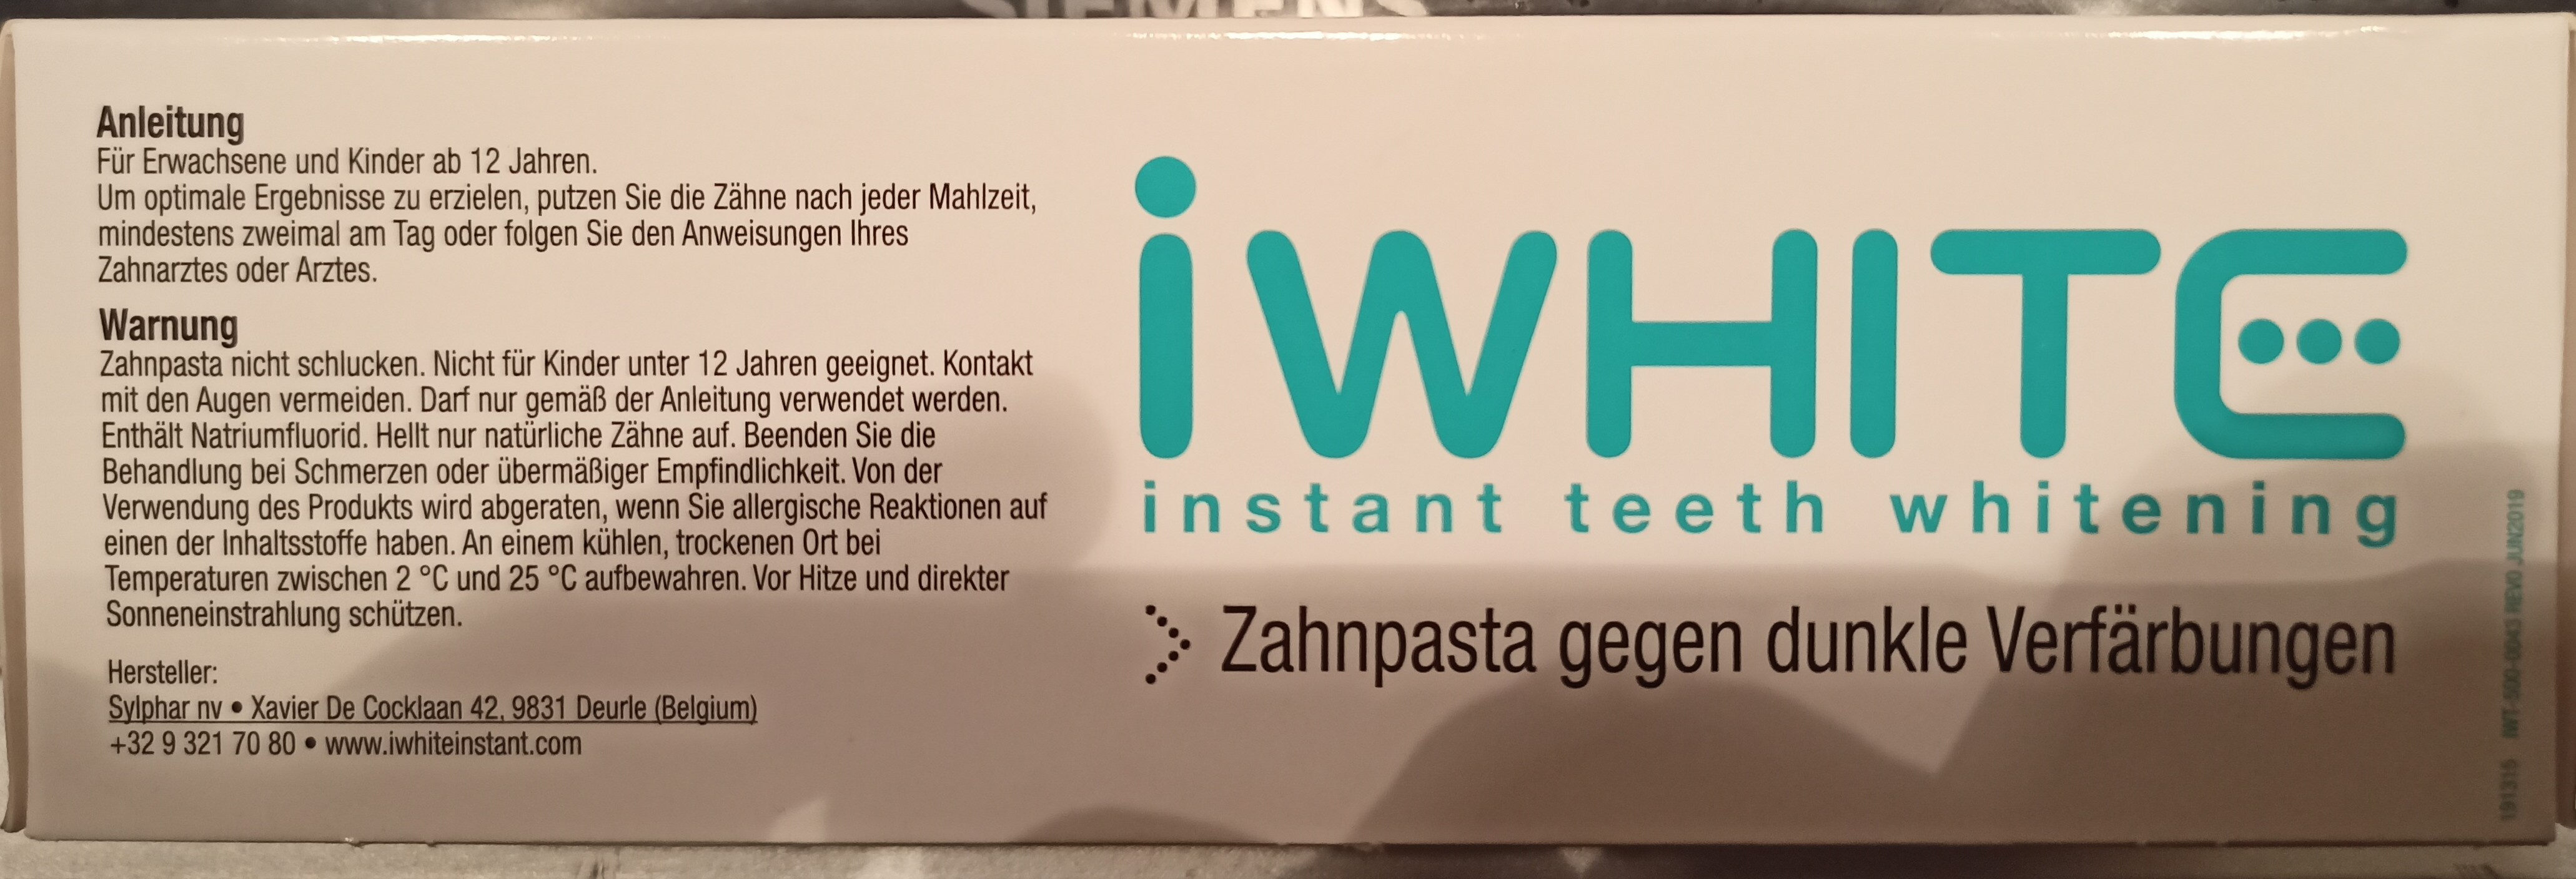 instant teeth whitening - Product - de